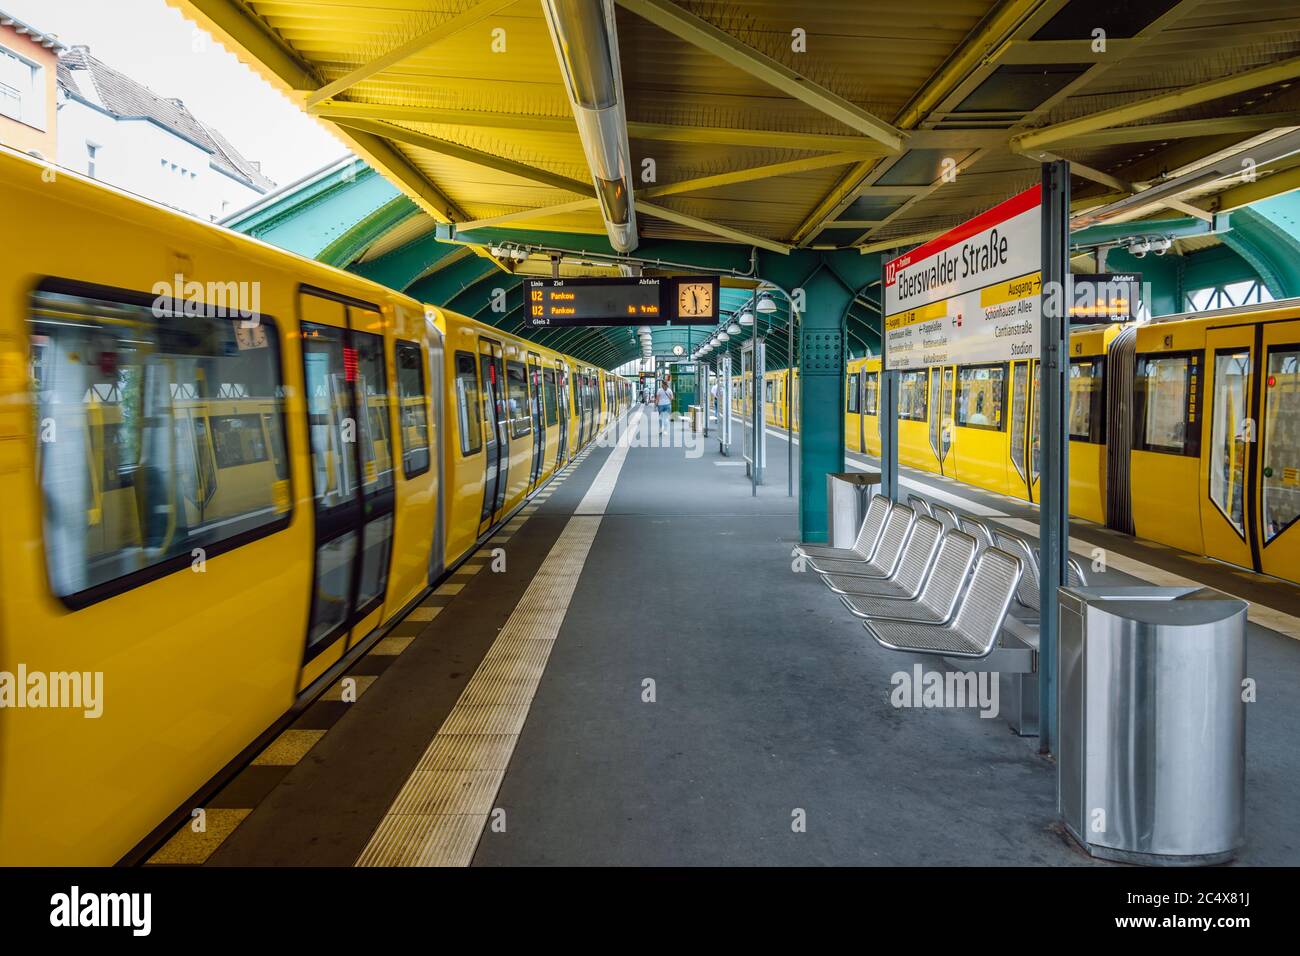 Eberswalder Strasse è una stazione della U-Bahn di Berlino situata sulla linea U2 di Berlino, Berlino, Germania. Foto Stock